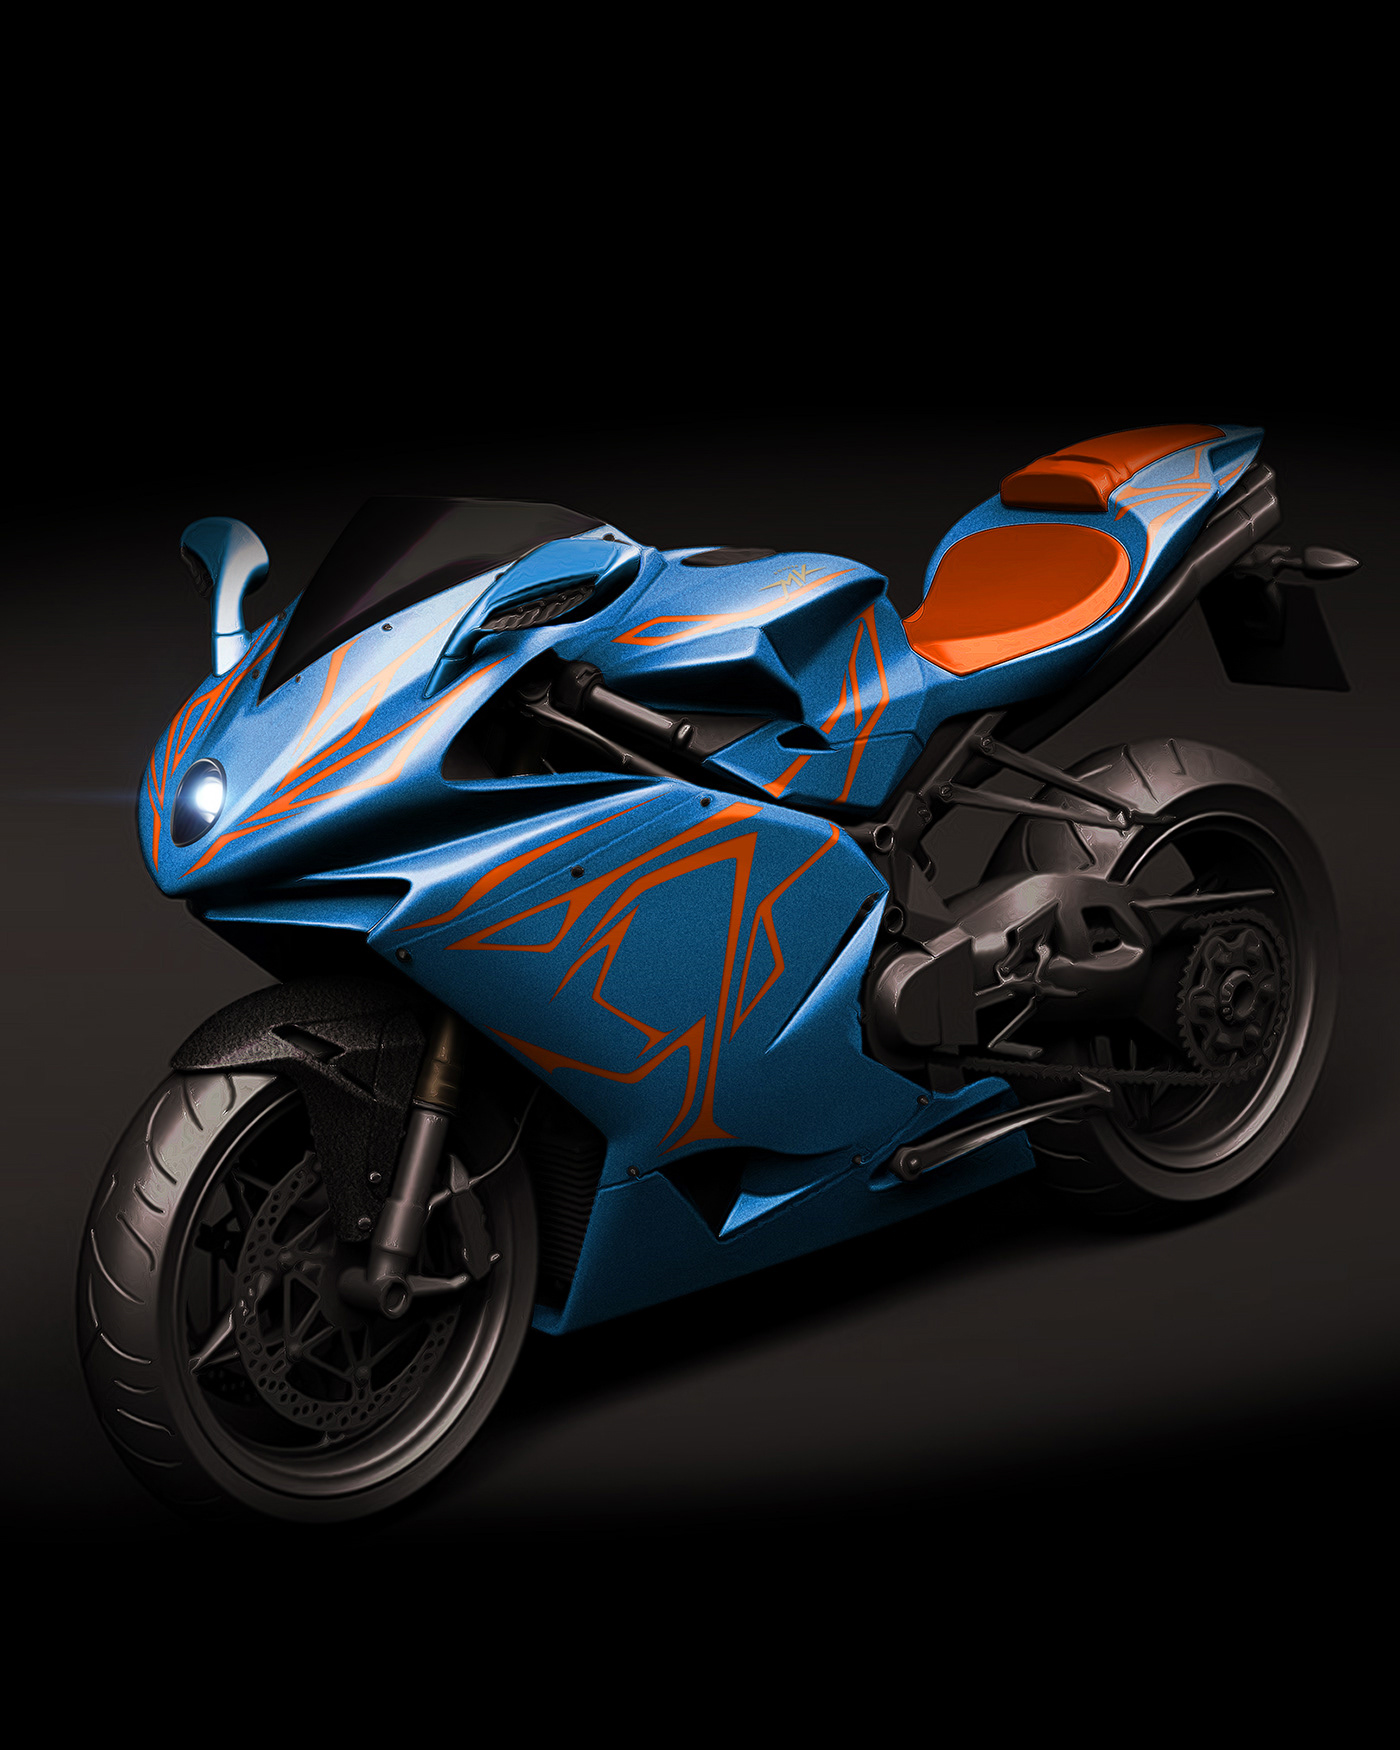 cosmogonie cosmogony designer motorcycle art mv agusta MV Agusta F4 reversed lune blueu Simon Designs